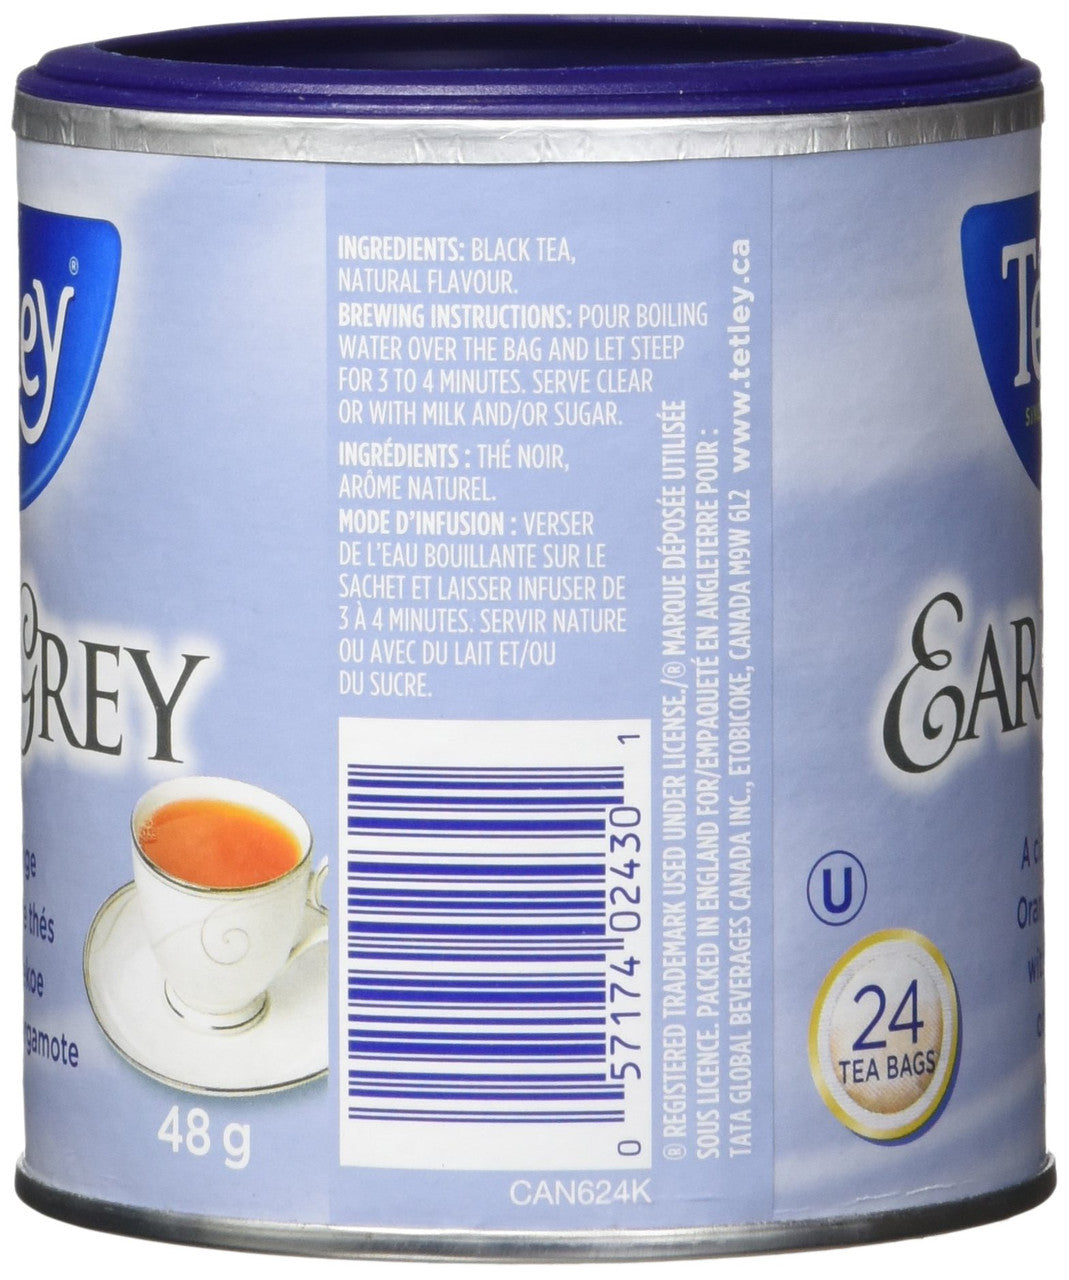 Tetley Earl Grey Tea, 24 tea bags, 48g/1.69oz, (Imported from Canada)